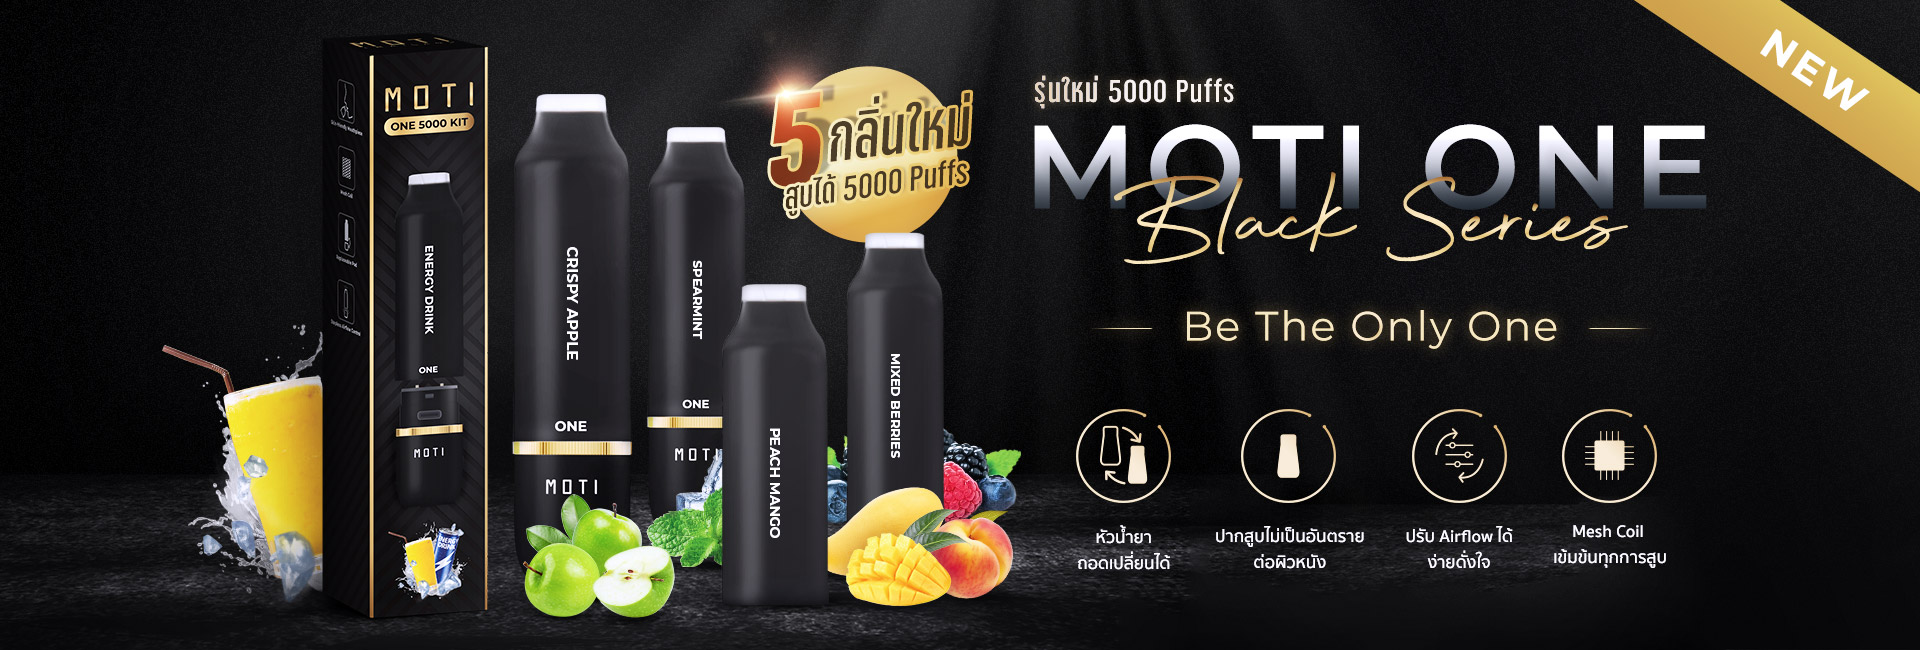 MOTI One Black Series dropshippod.com บุหรี่ไฟฟ้า หัวน้ำยา Moti Slite vape #บุหร่าไฟฟี้ pods หัวน้ำยา ครบวงจร